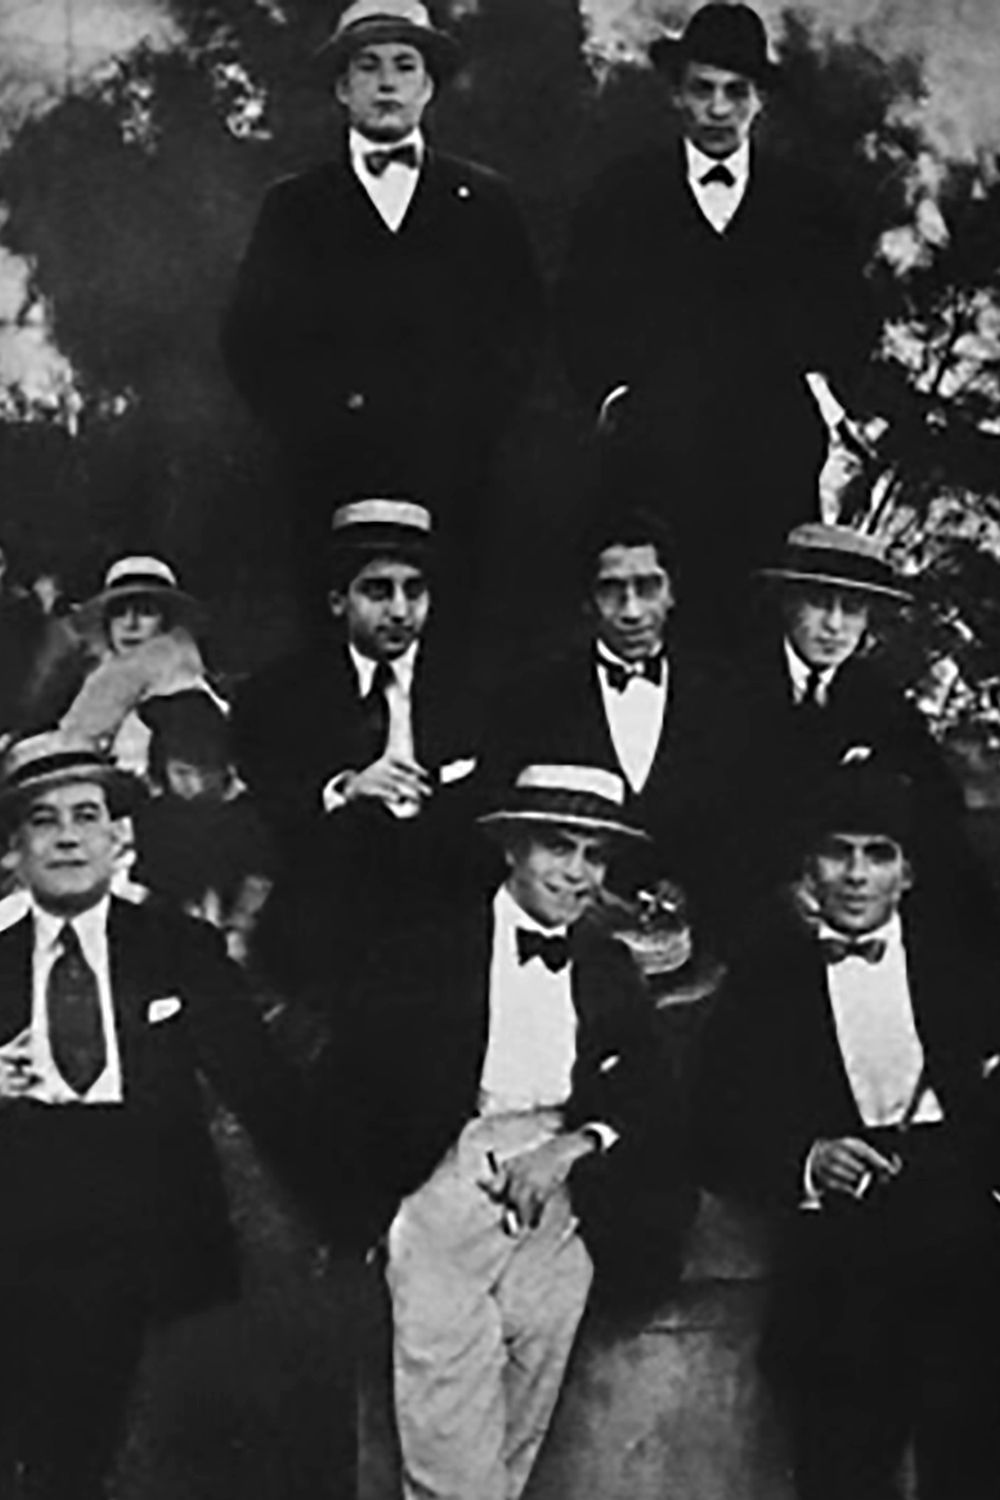 Eduardo Arolas, Argentine Tango musician, leader and composer, and his orchestra in 1919.